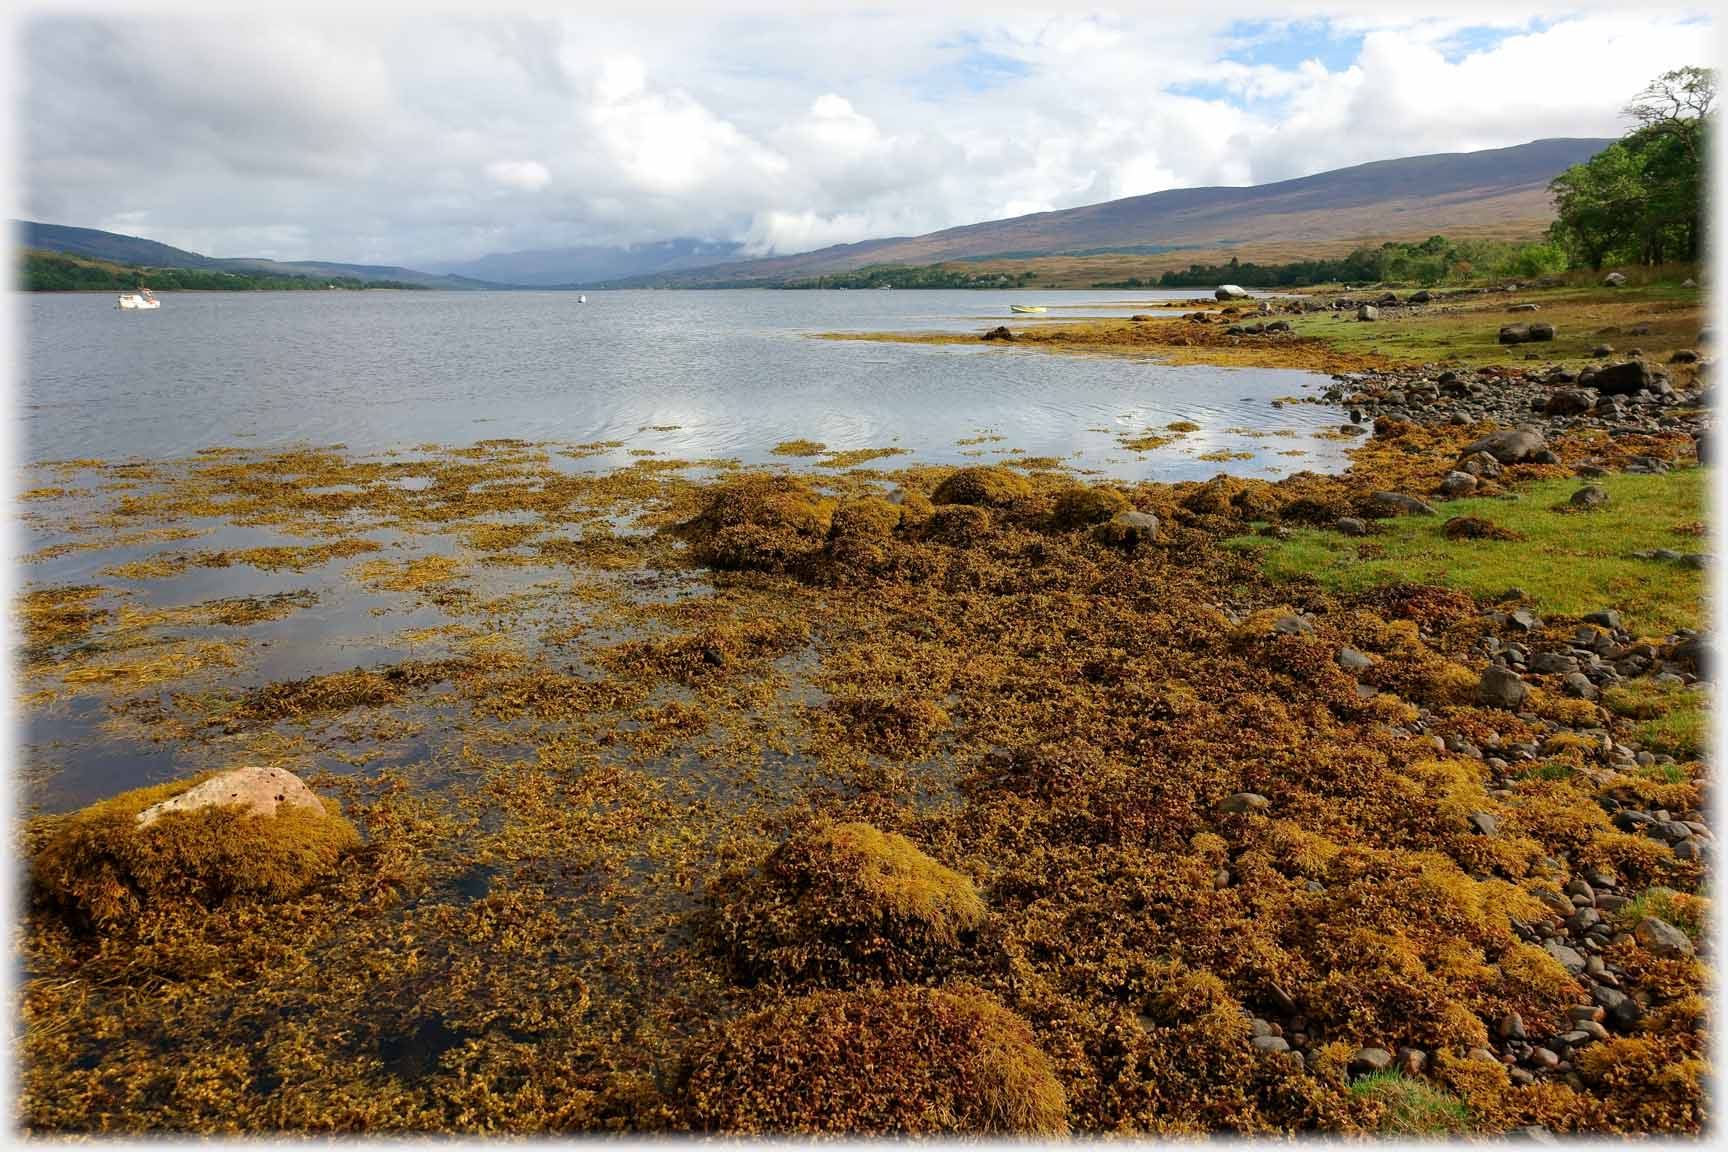 Shoreline of kelp with loch beyond.